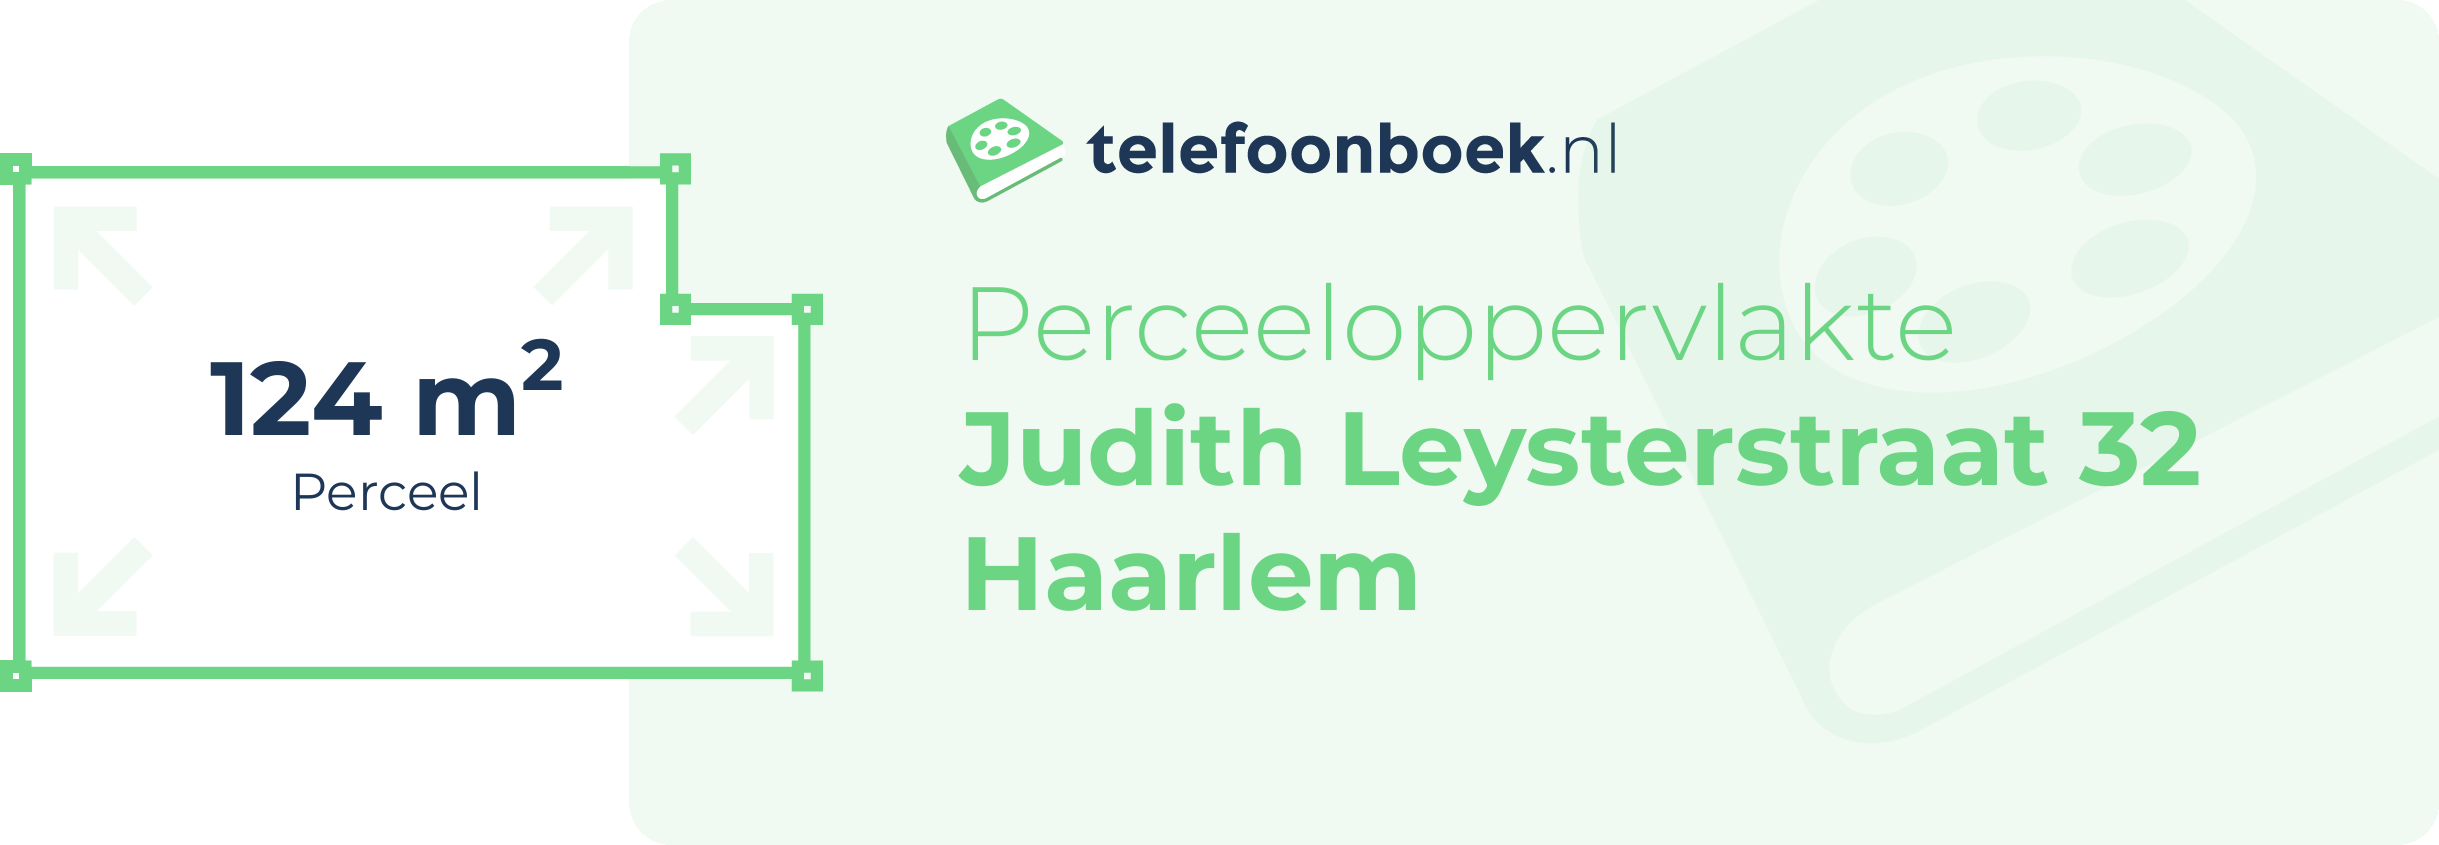 Perceeloppervlakte Judith Leysterstraat 32 Haarlem